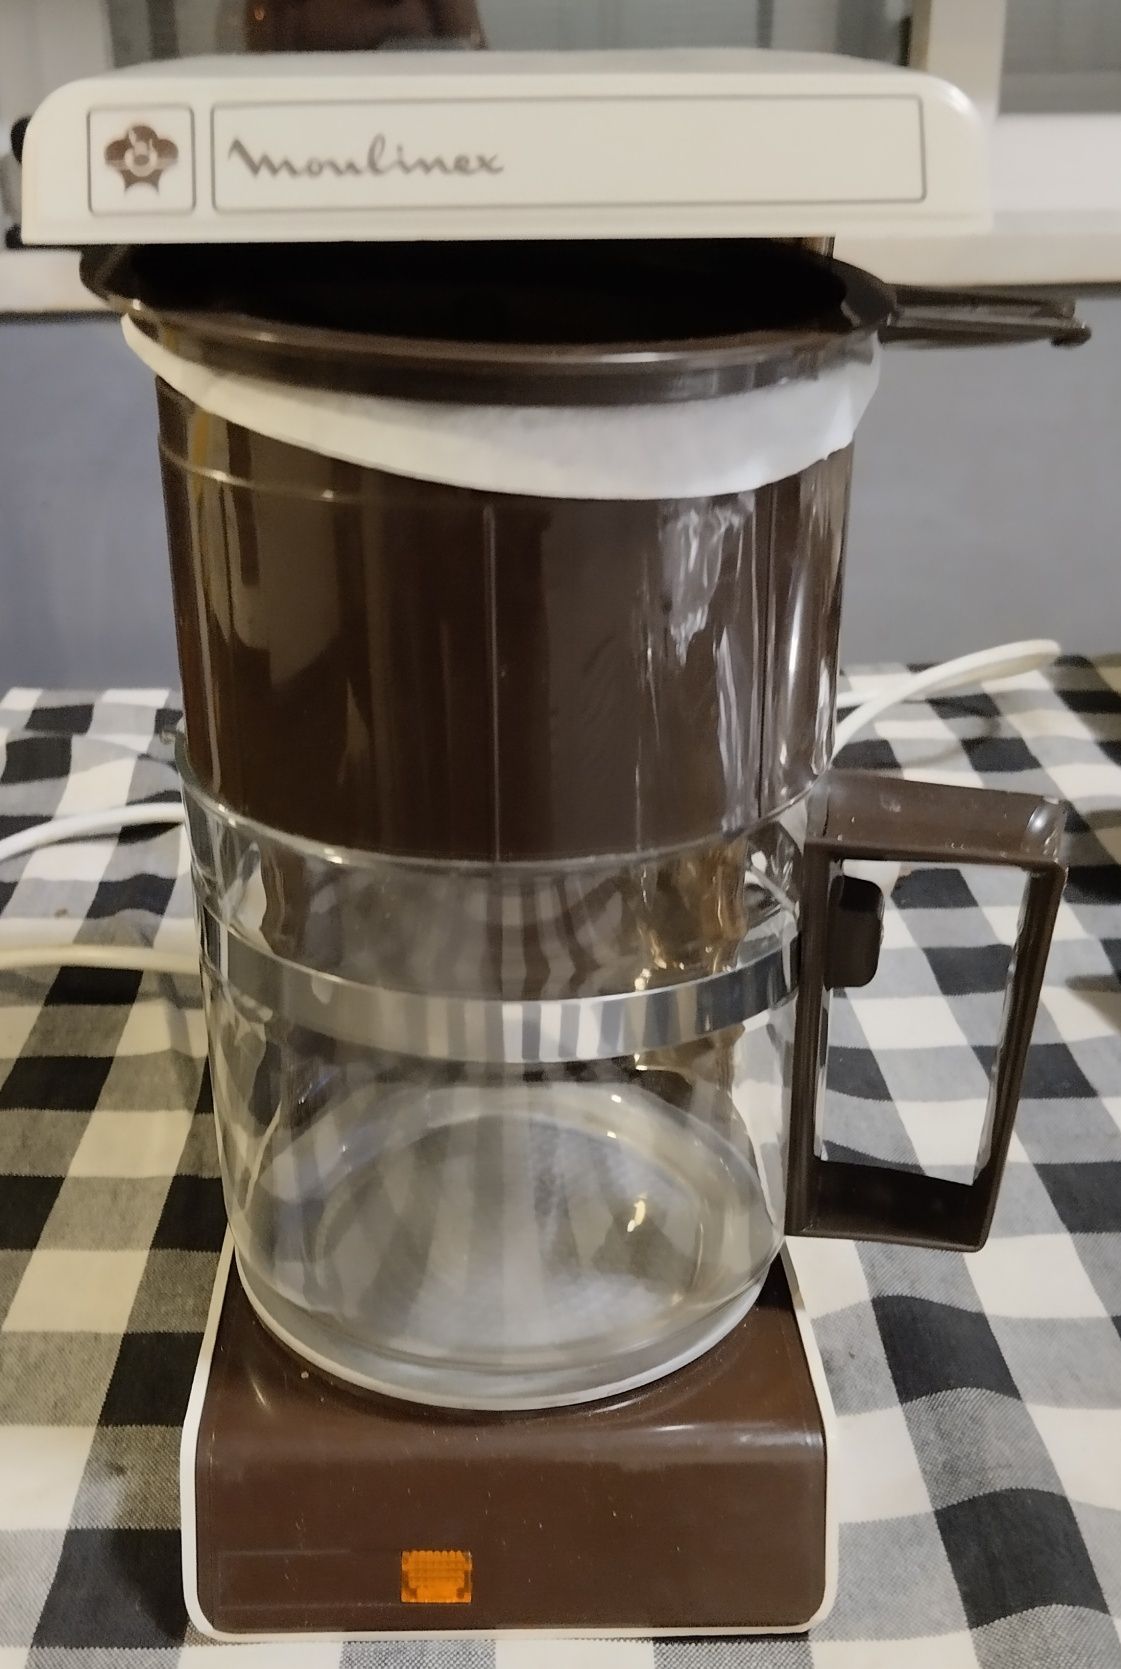 Máquina Moulinex vintage de café de saco